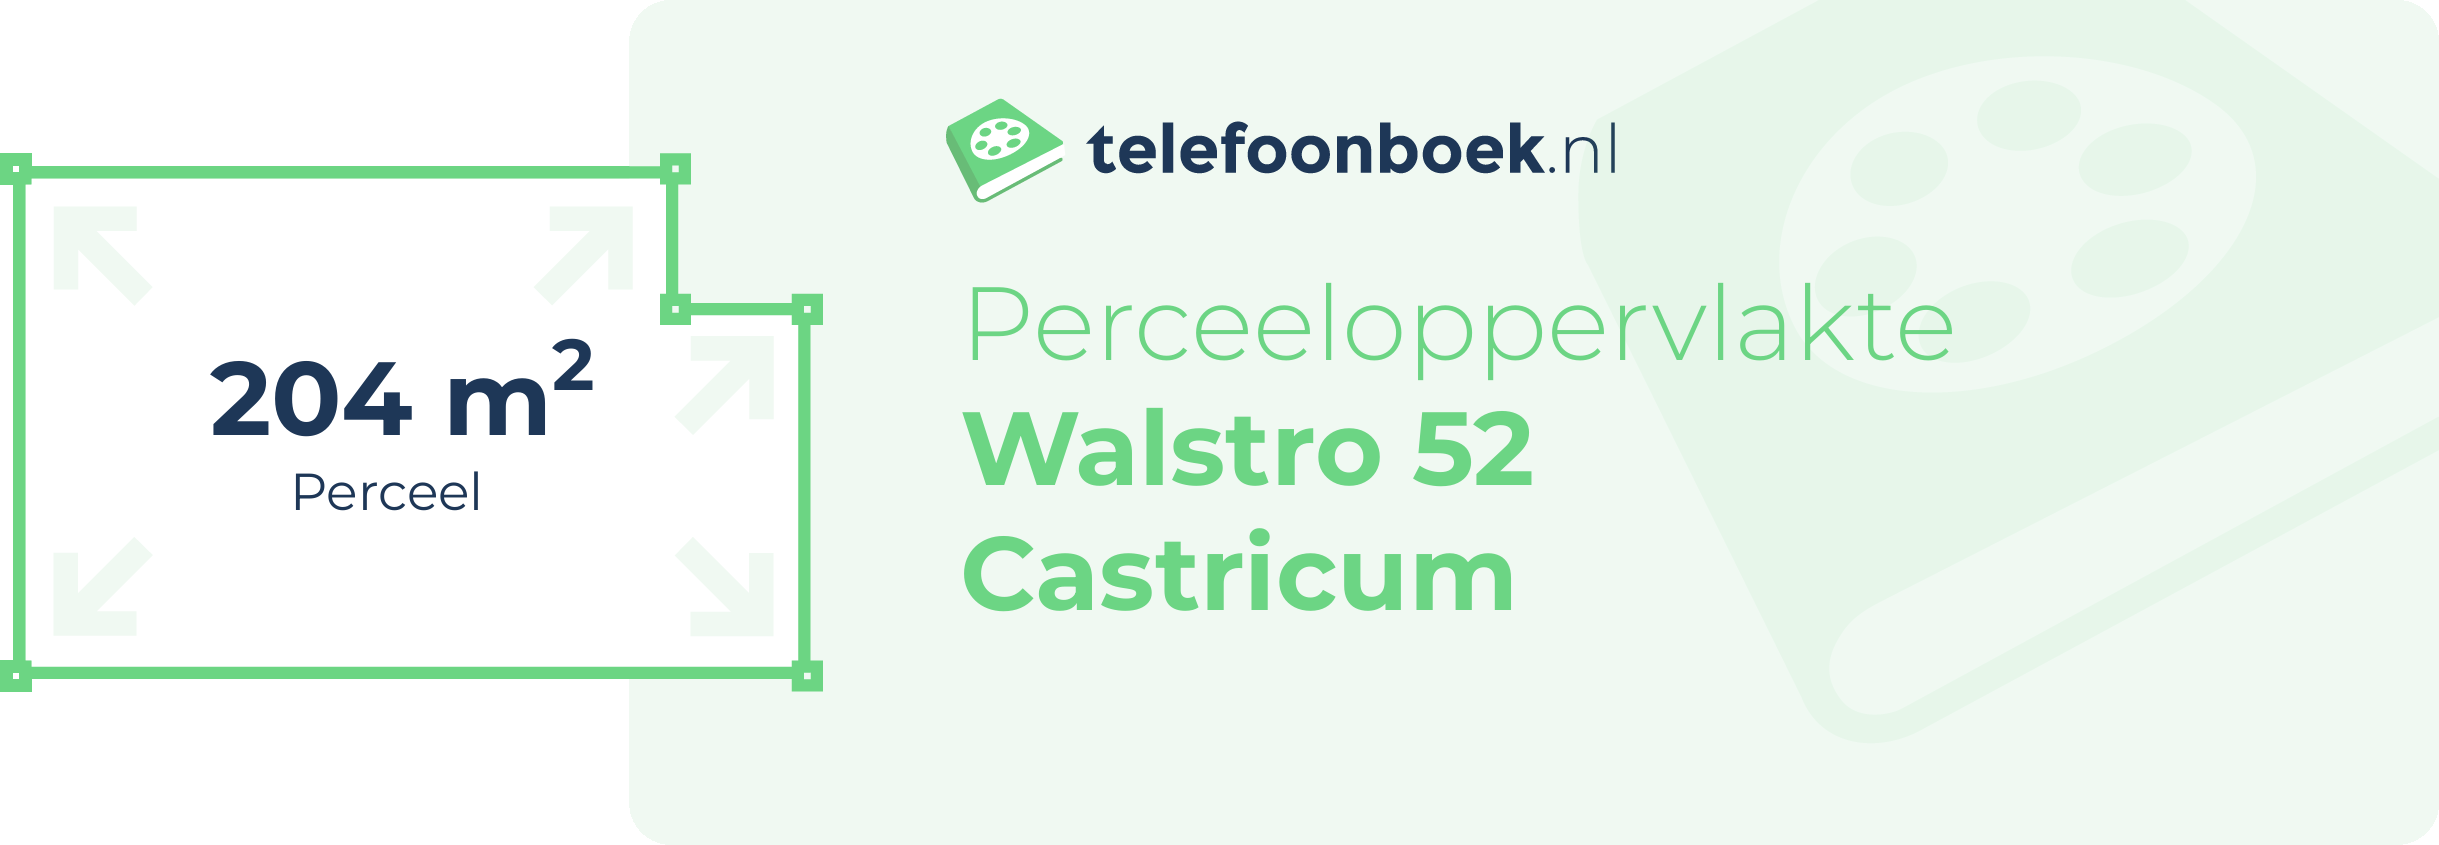 Perceeloppervlakte Walstro 52 Castricum